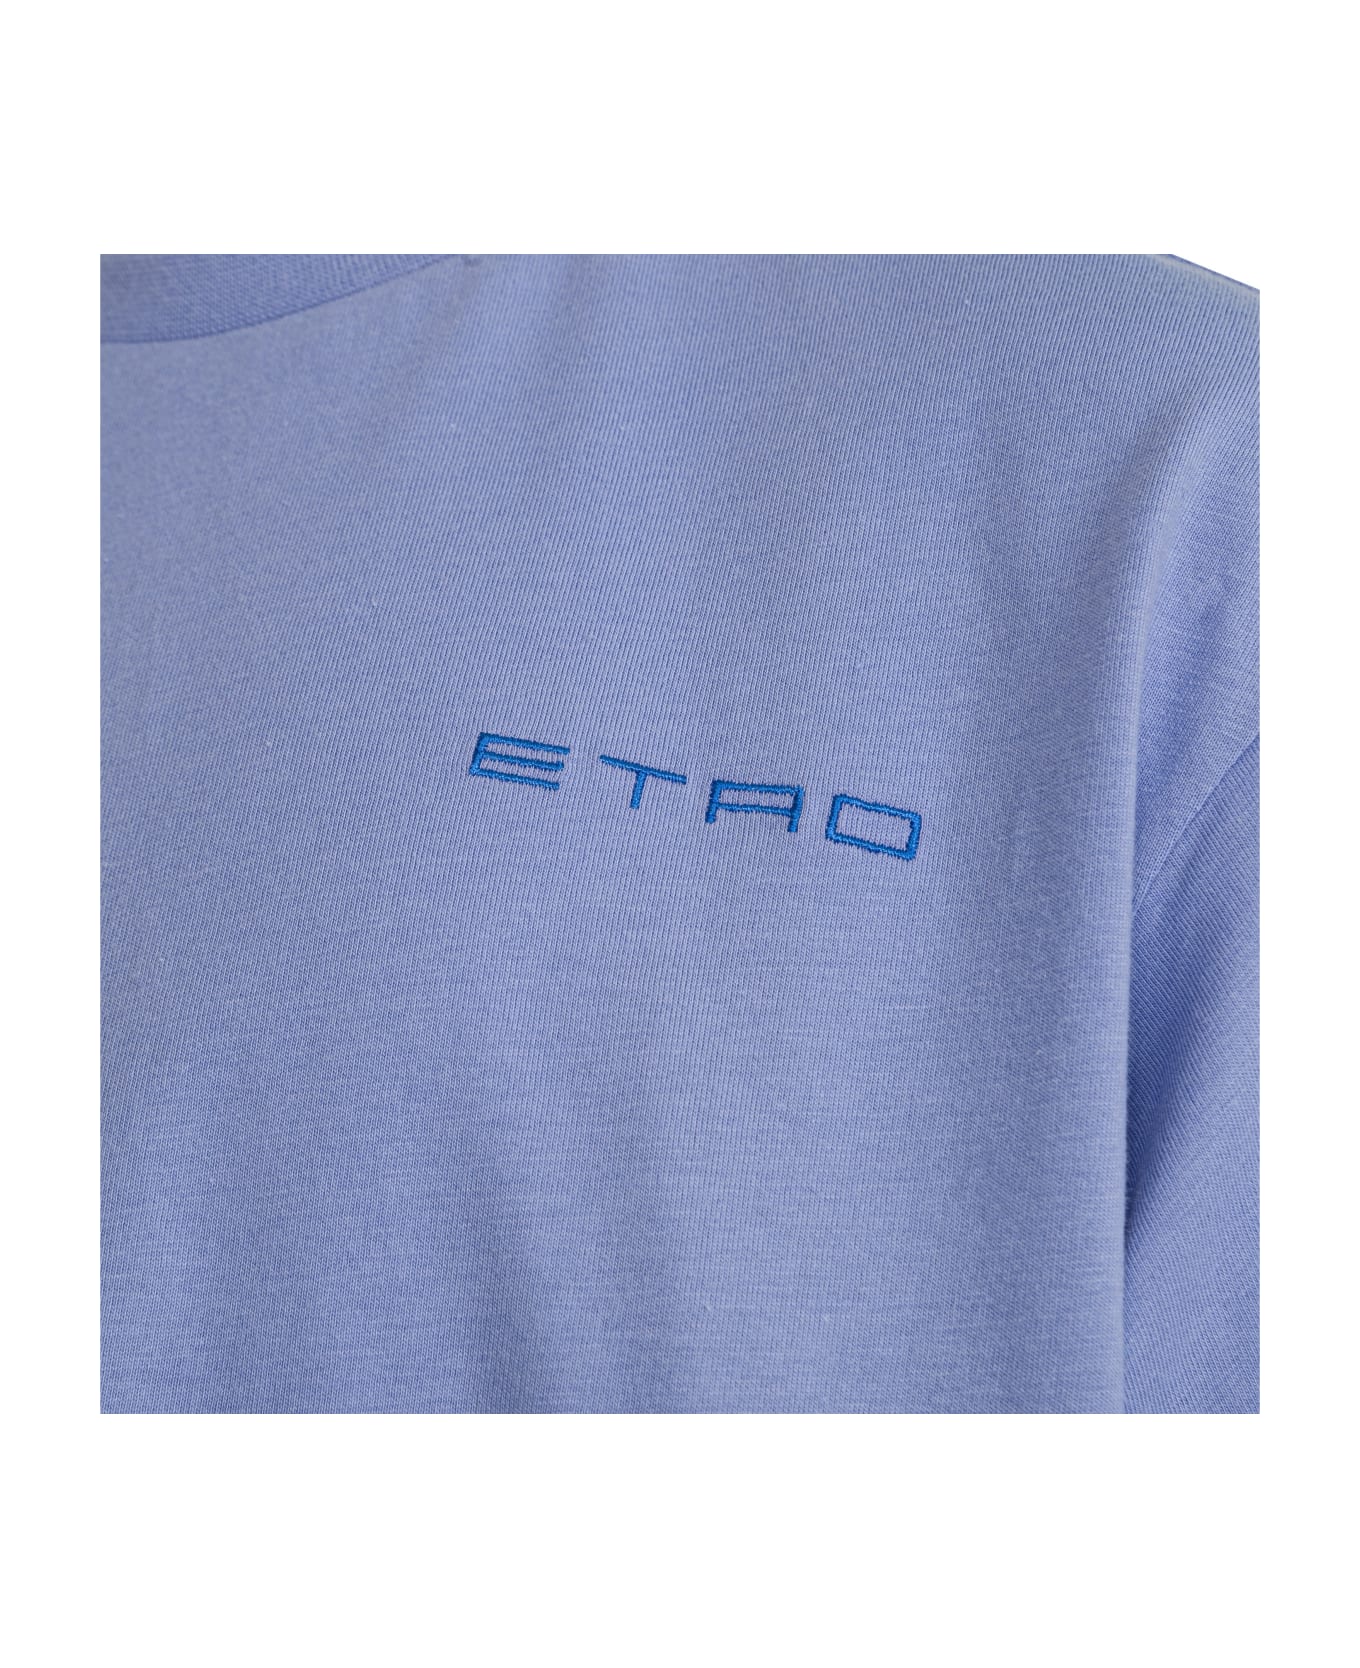 Etro T-shirt Con Stampa - Light blue